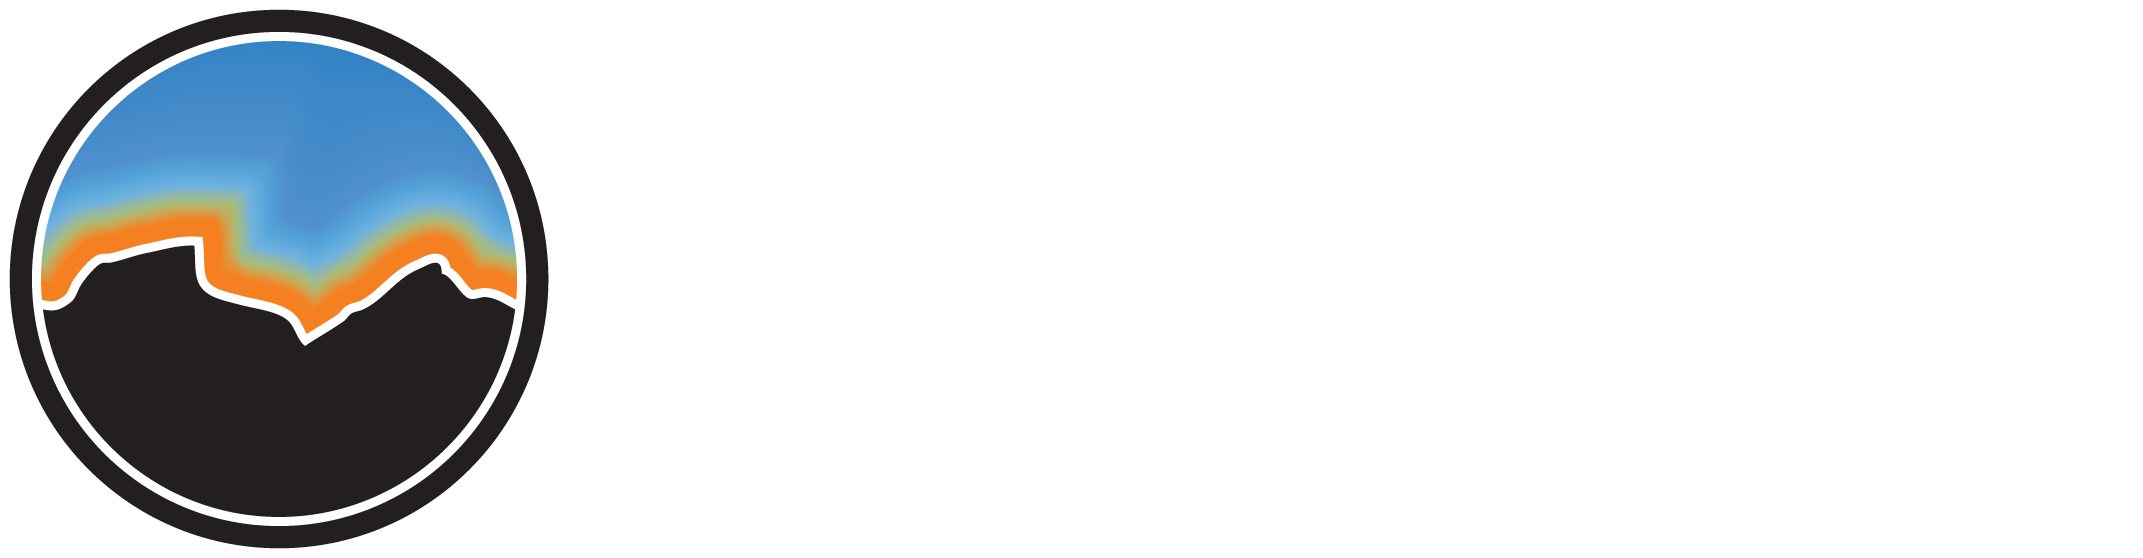 Work In Burke Logo